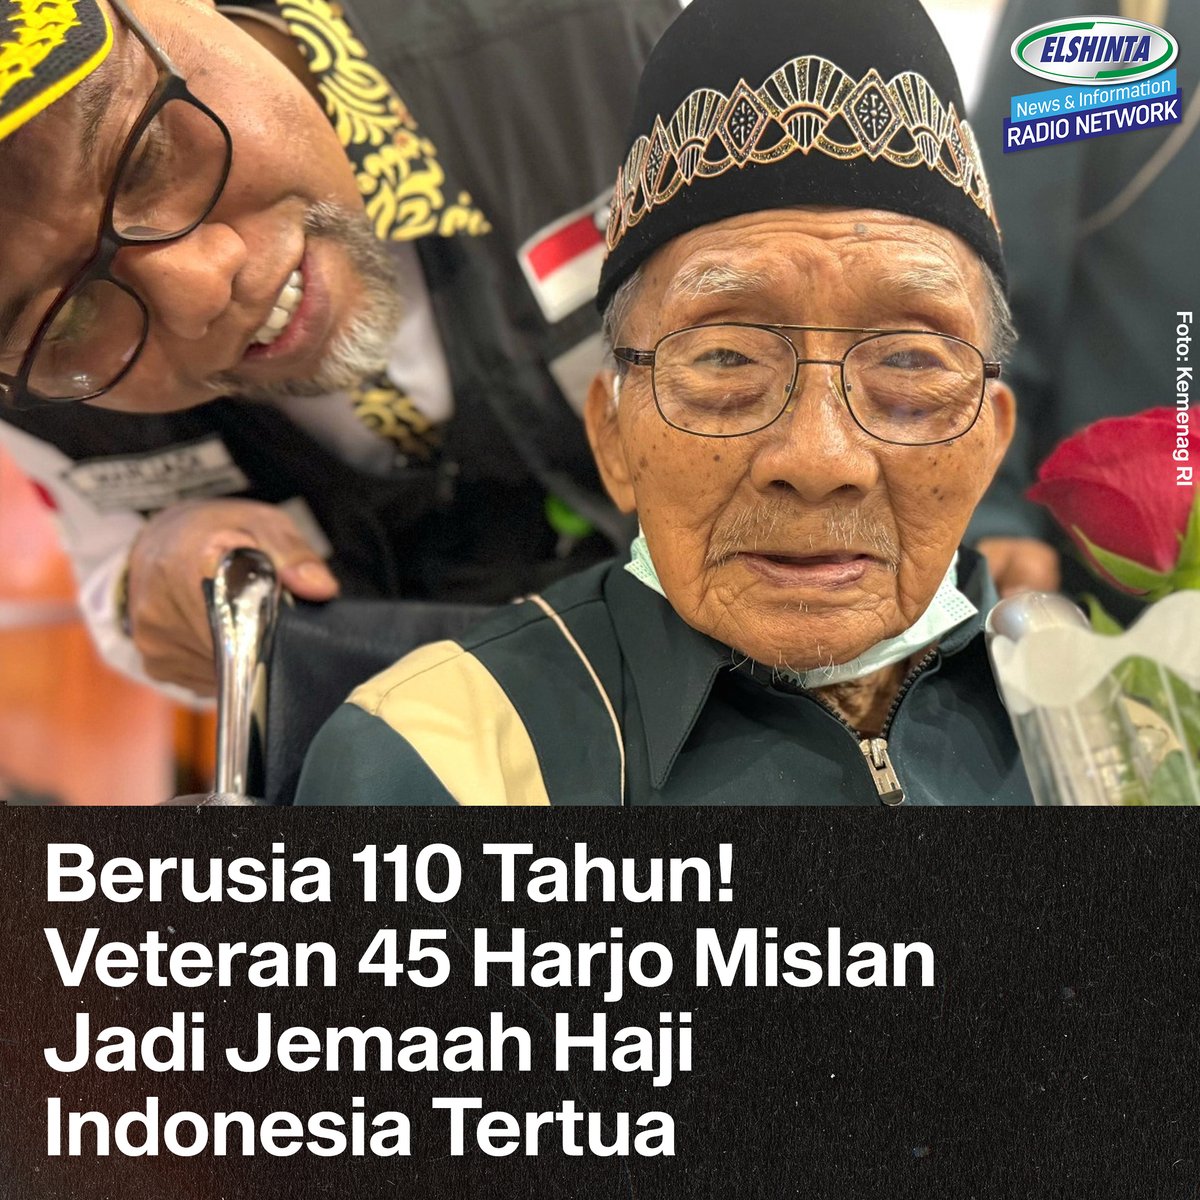 Seorang veteran pejuang kemerdekaan 45 bernama Harjo Mislan menjadi Calon Jemaah Haji Indonesia Tertua untuk Musim Haji 1445H/2024. Jemaah haji asal Ponorogo tersebut akan menjalani serangkaian ibadah di Tanah Suci di usia 110 tahun.

Dikutip dari situs resmi Kementerian Agama